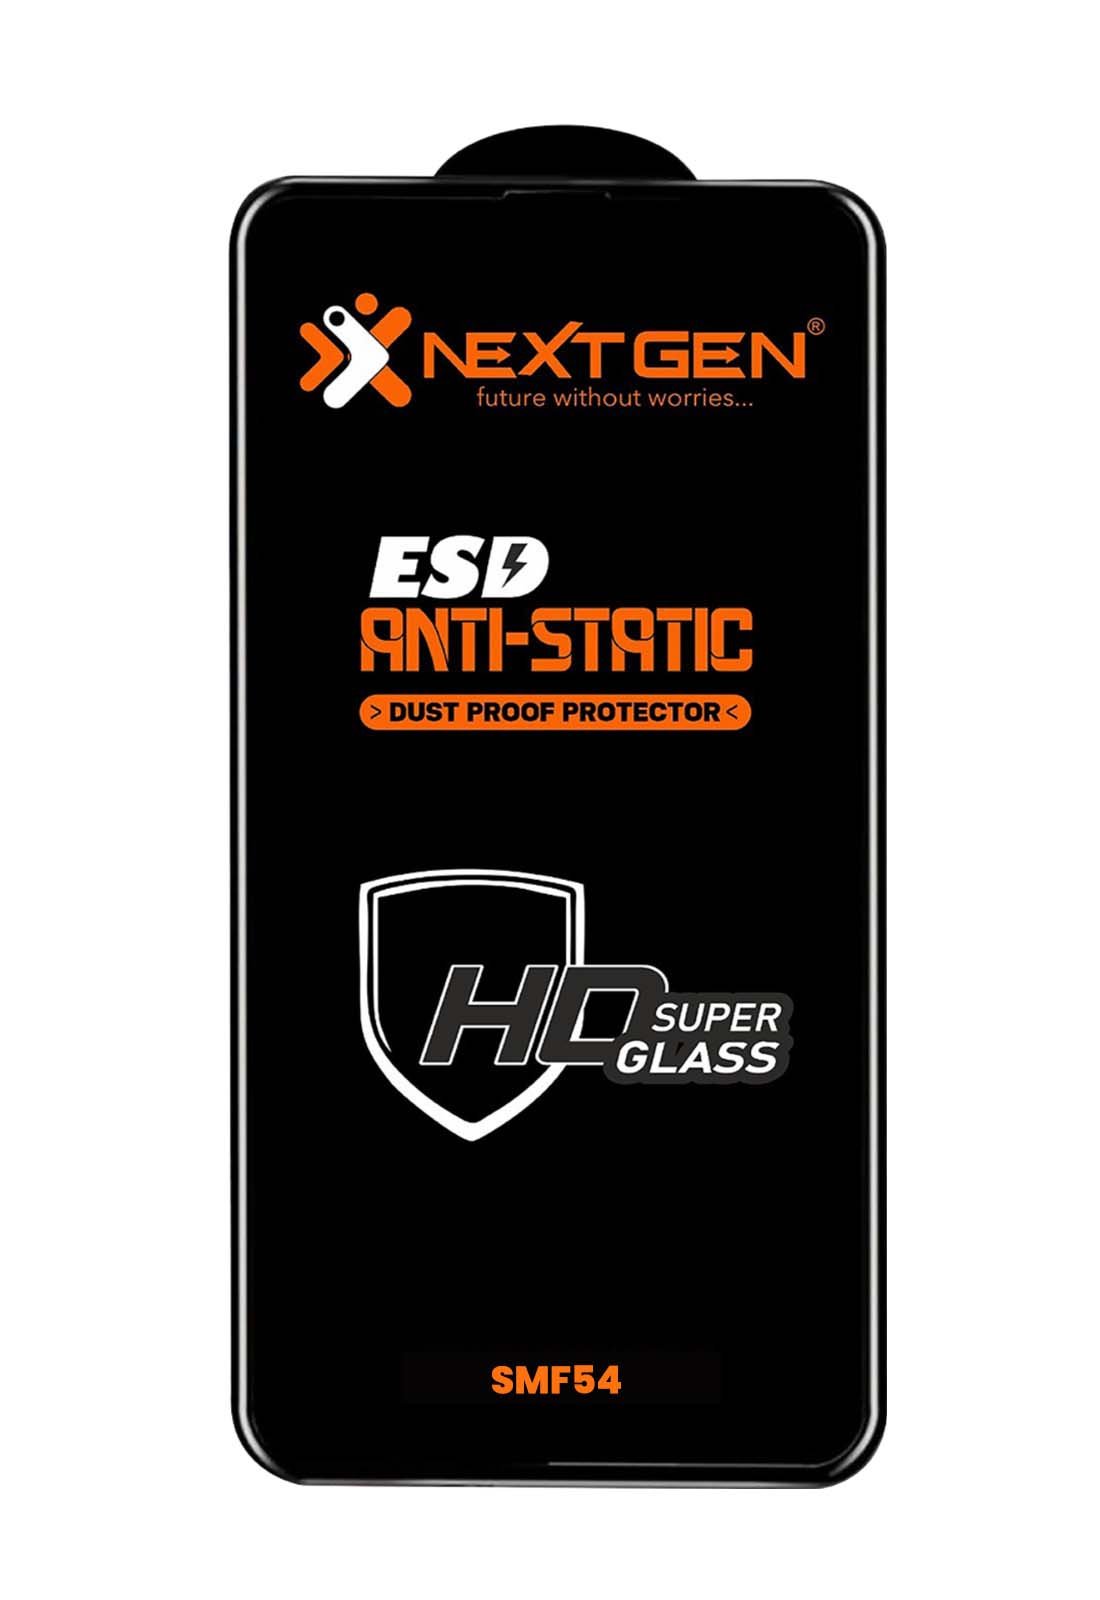 SMF54 Samsung ESD Anti-Static HD Super Glass